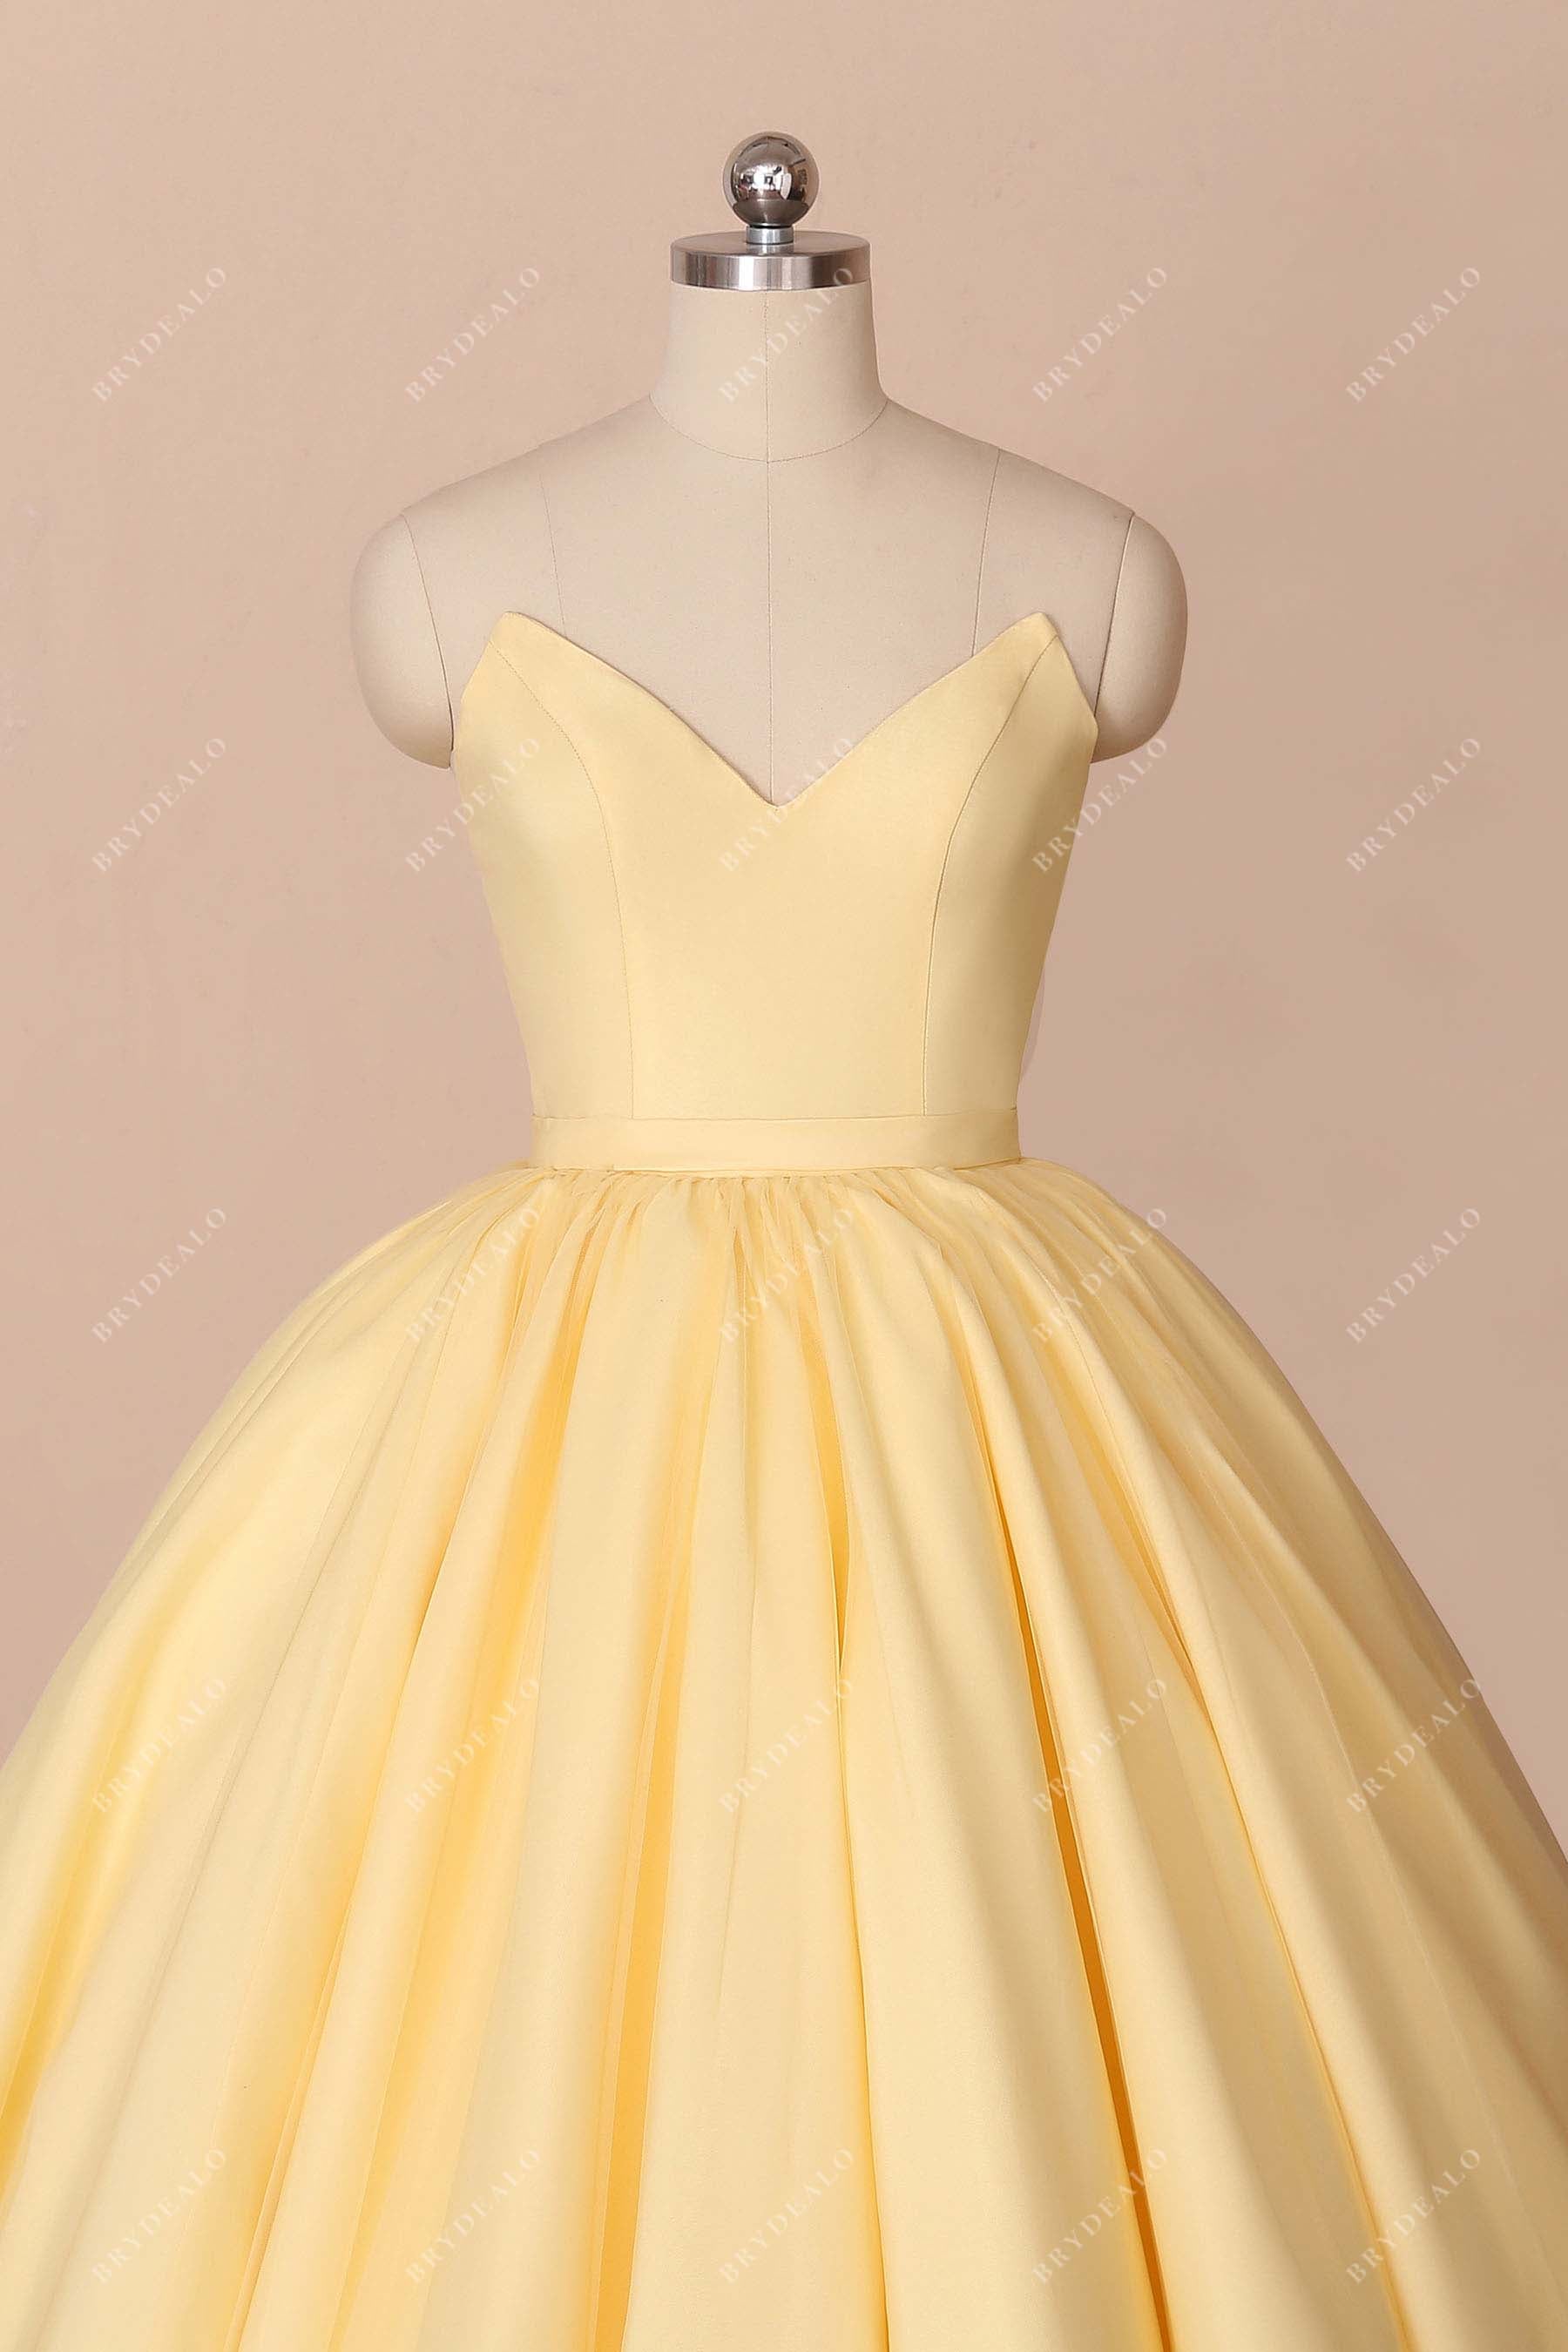 V-neck corset strapless yellow dress